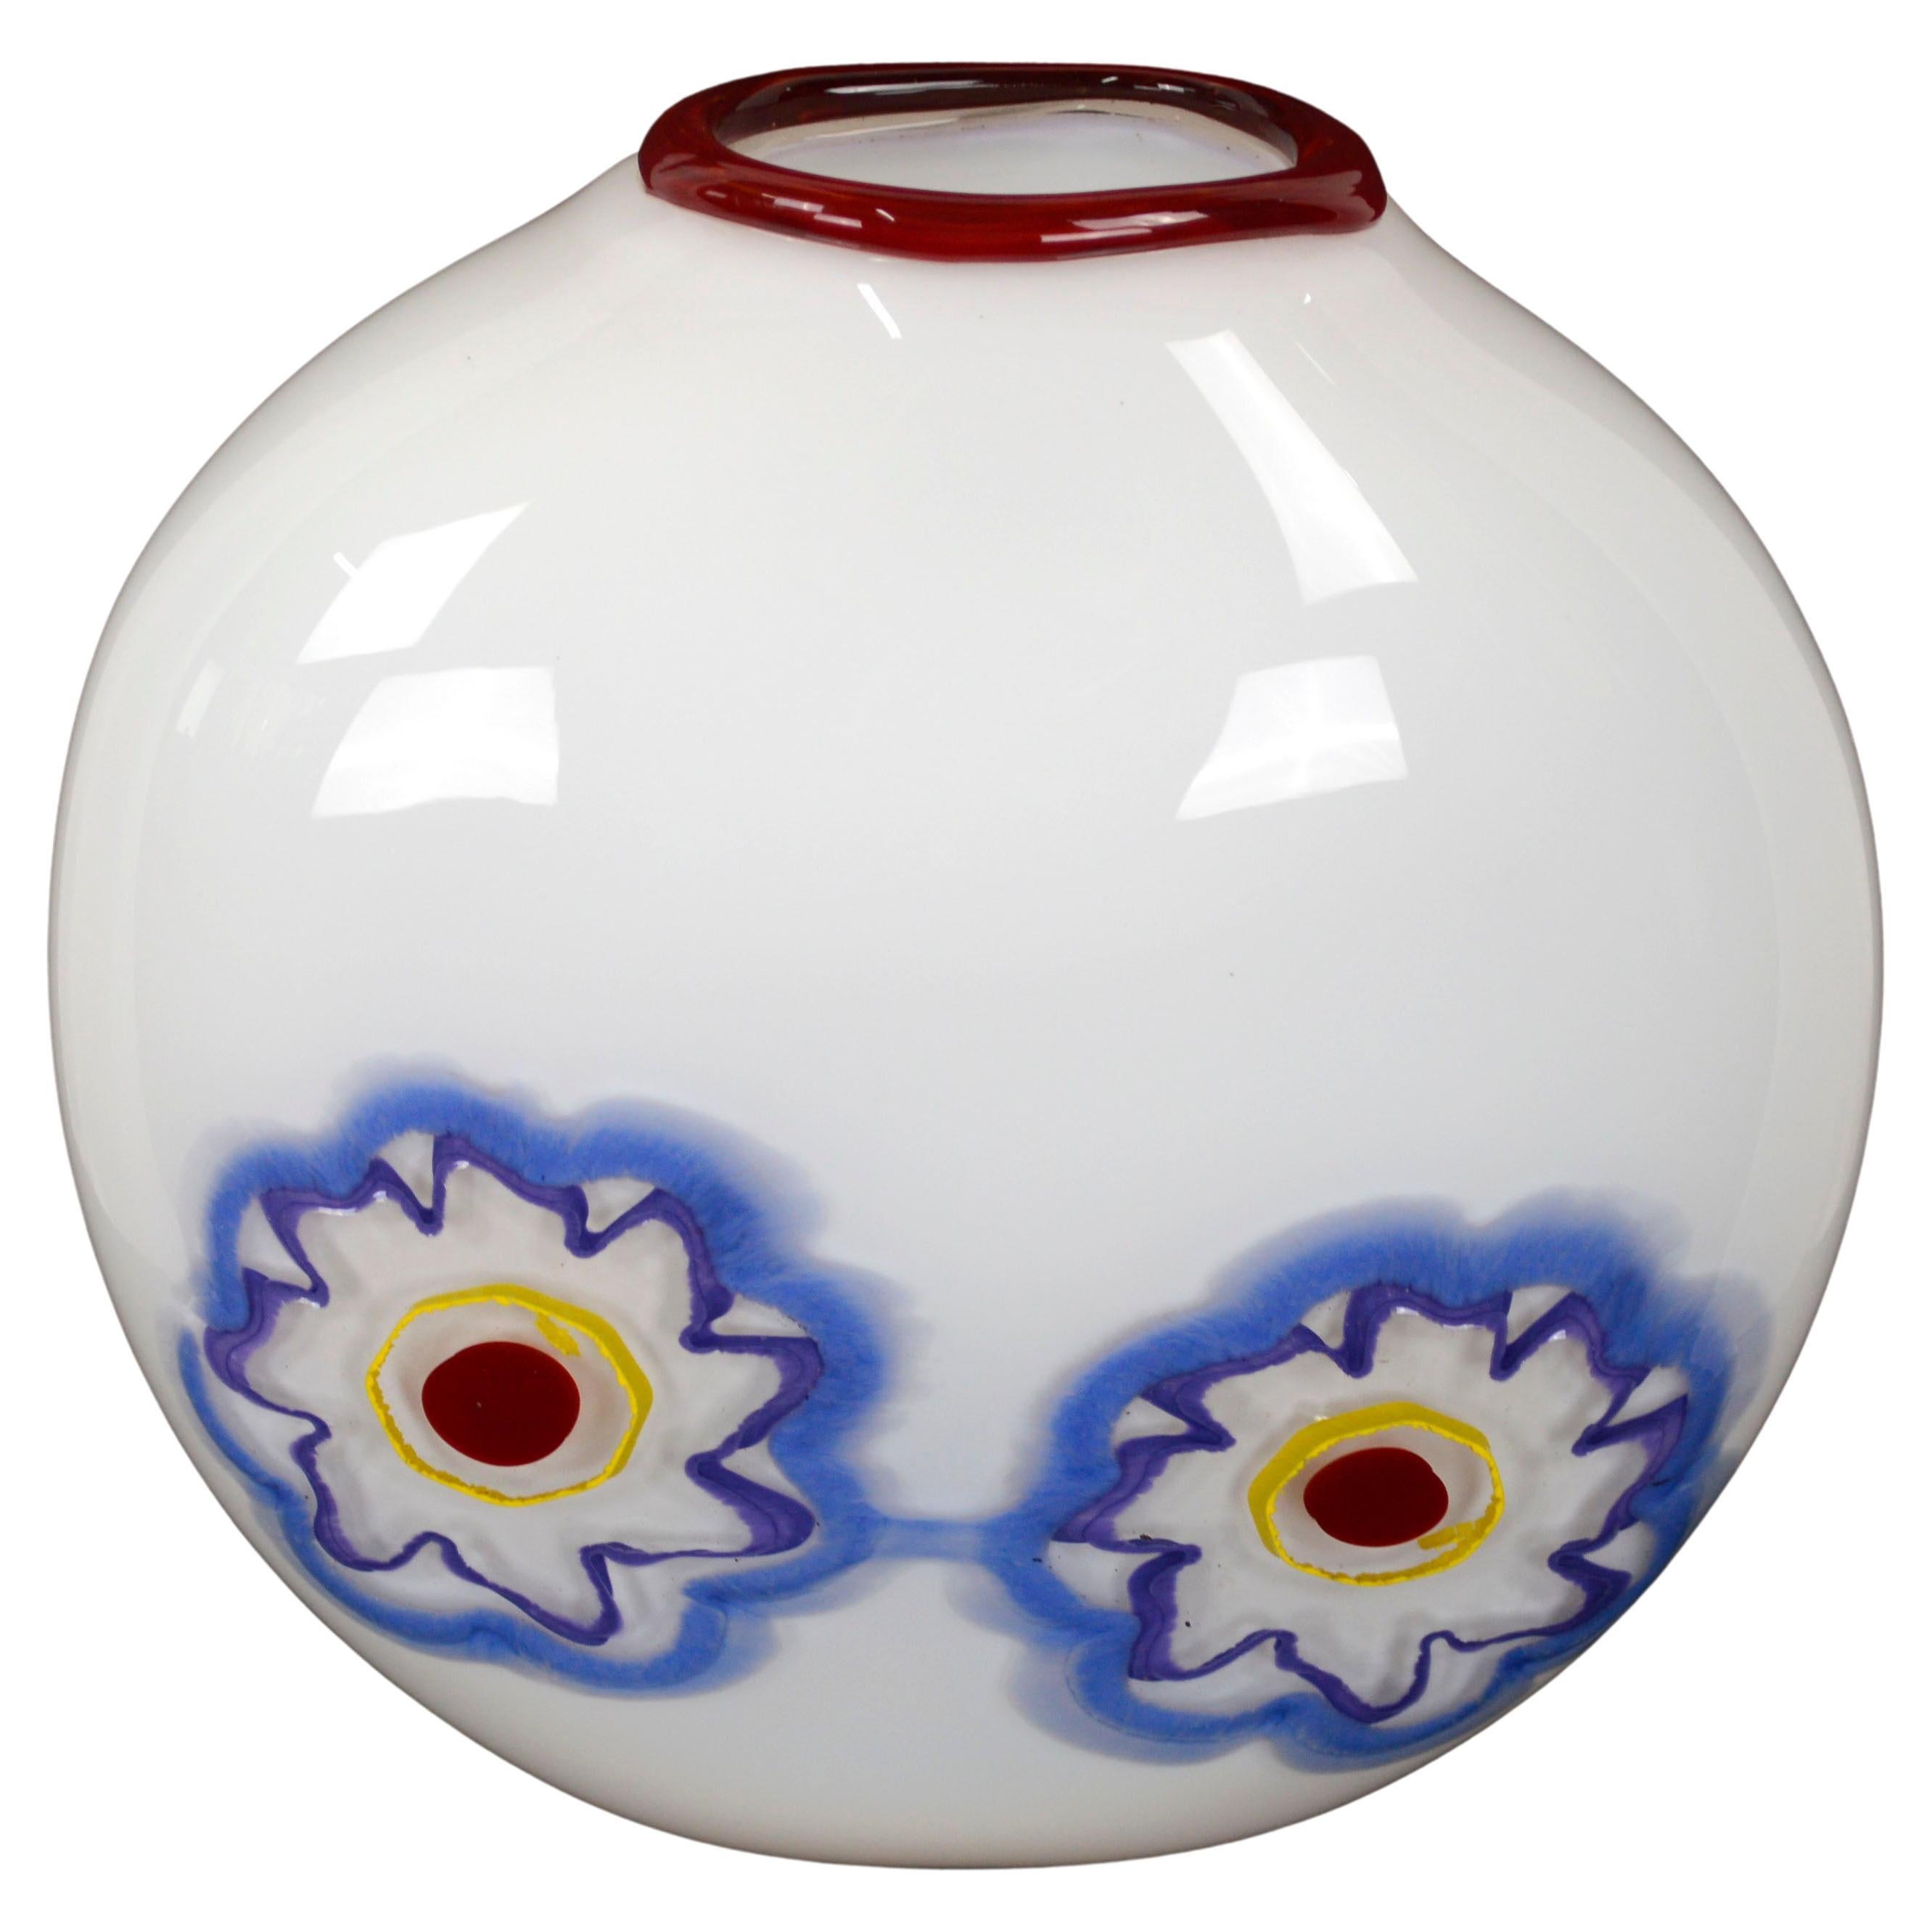 Nadine Saylor's Hand Blown Glass Vase, Flower Power For Sale